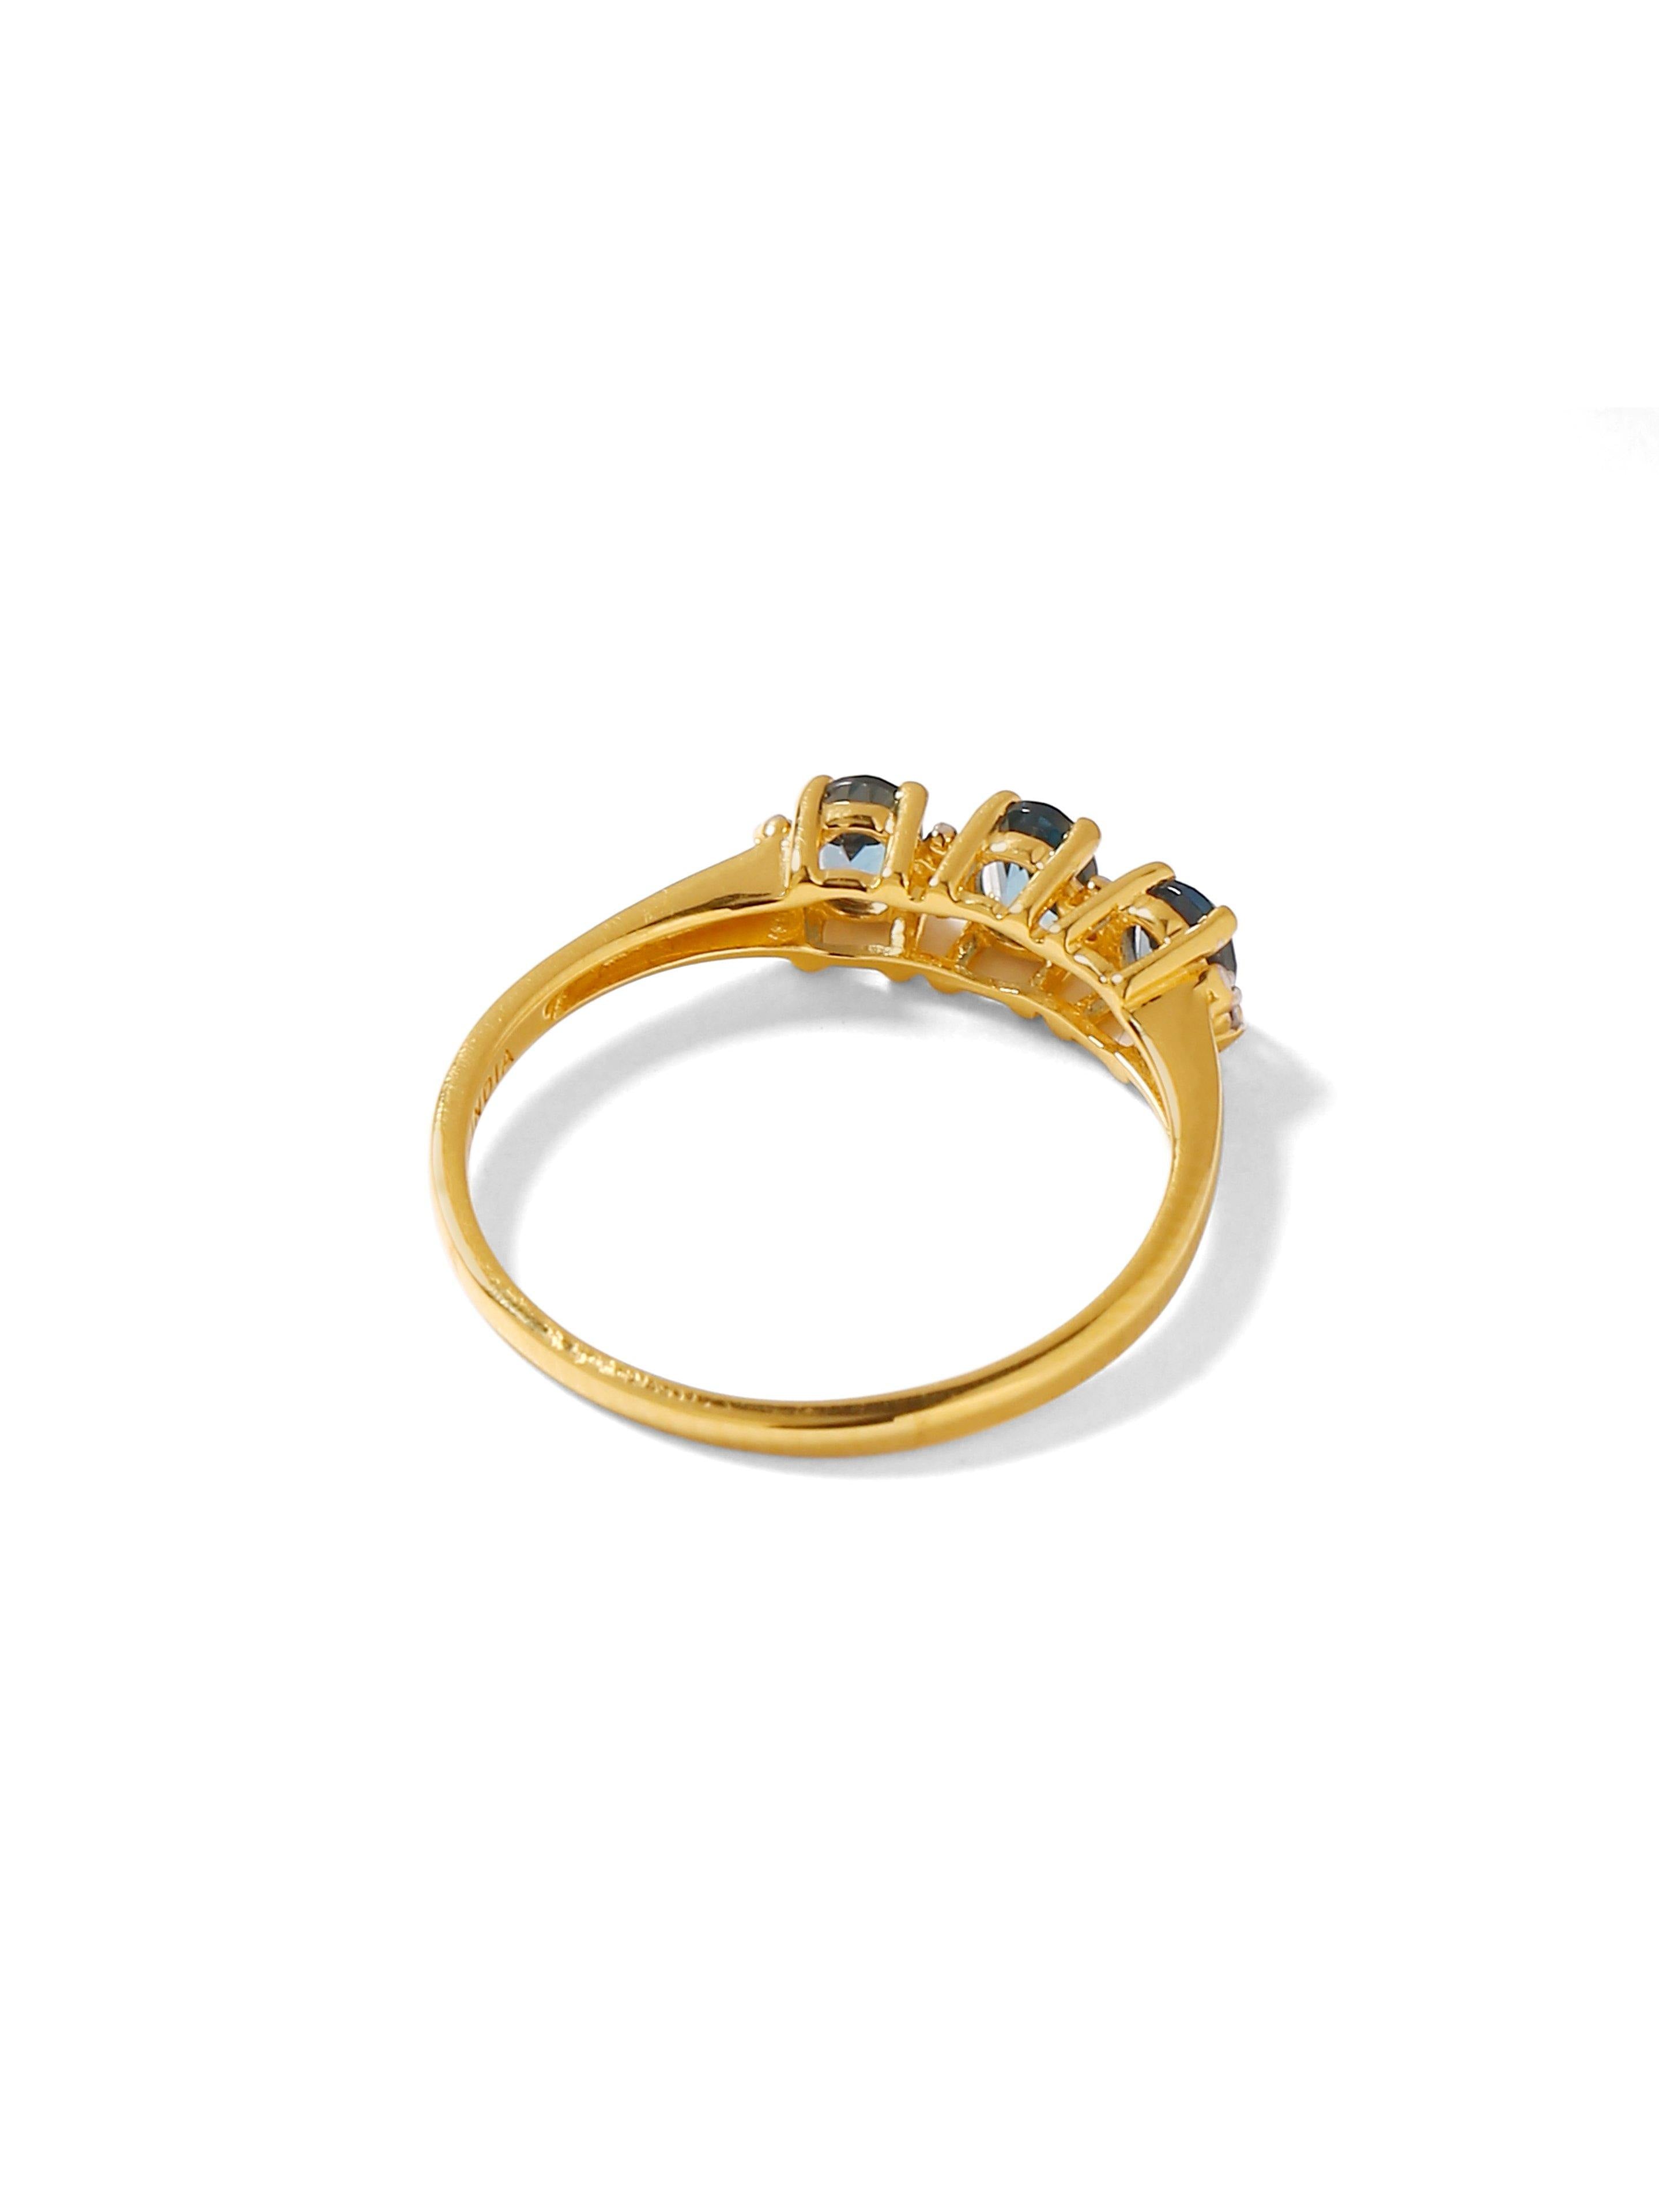 London Blue Topaz White Topaz Solid 10K Yellow Gold Gemstone Ring - YoTreasure